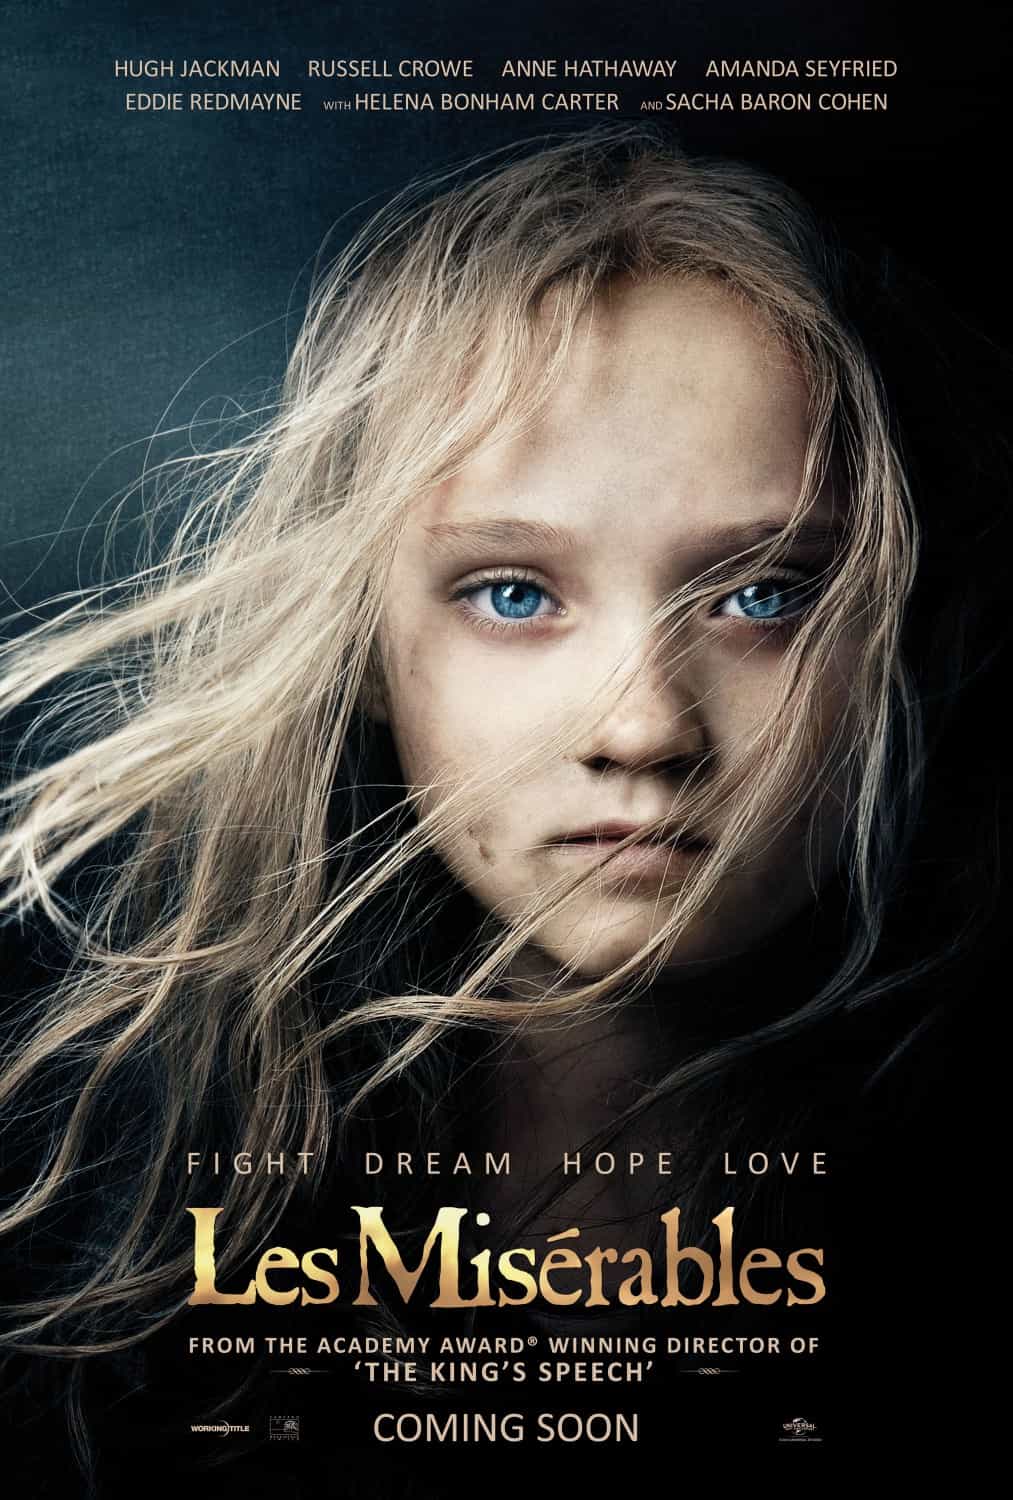 UK Box Office Report: Les Misérables tops ahead of awards